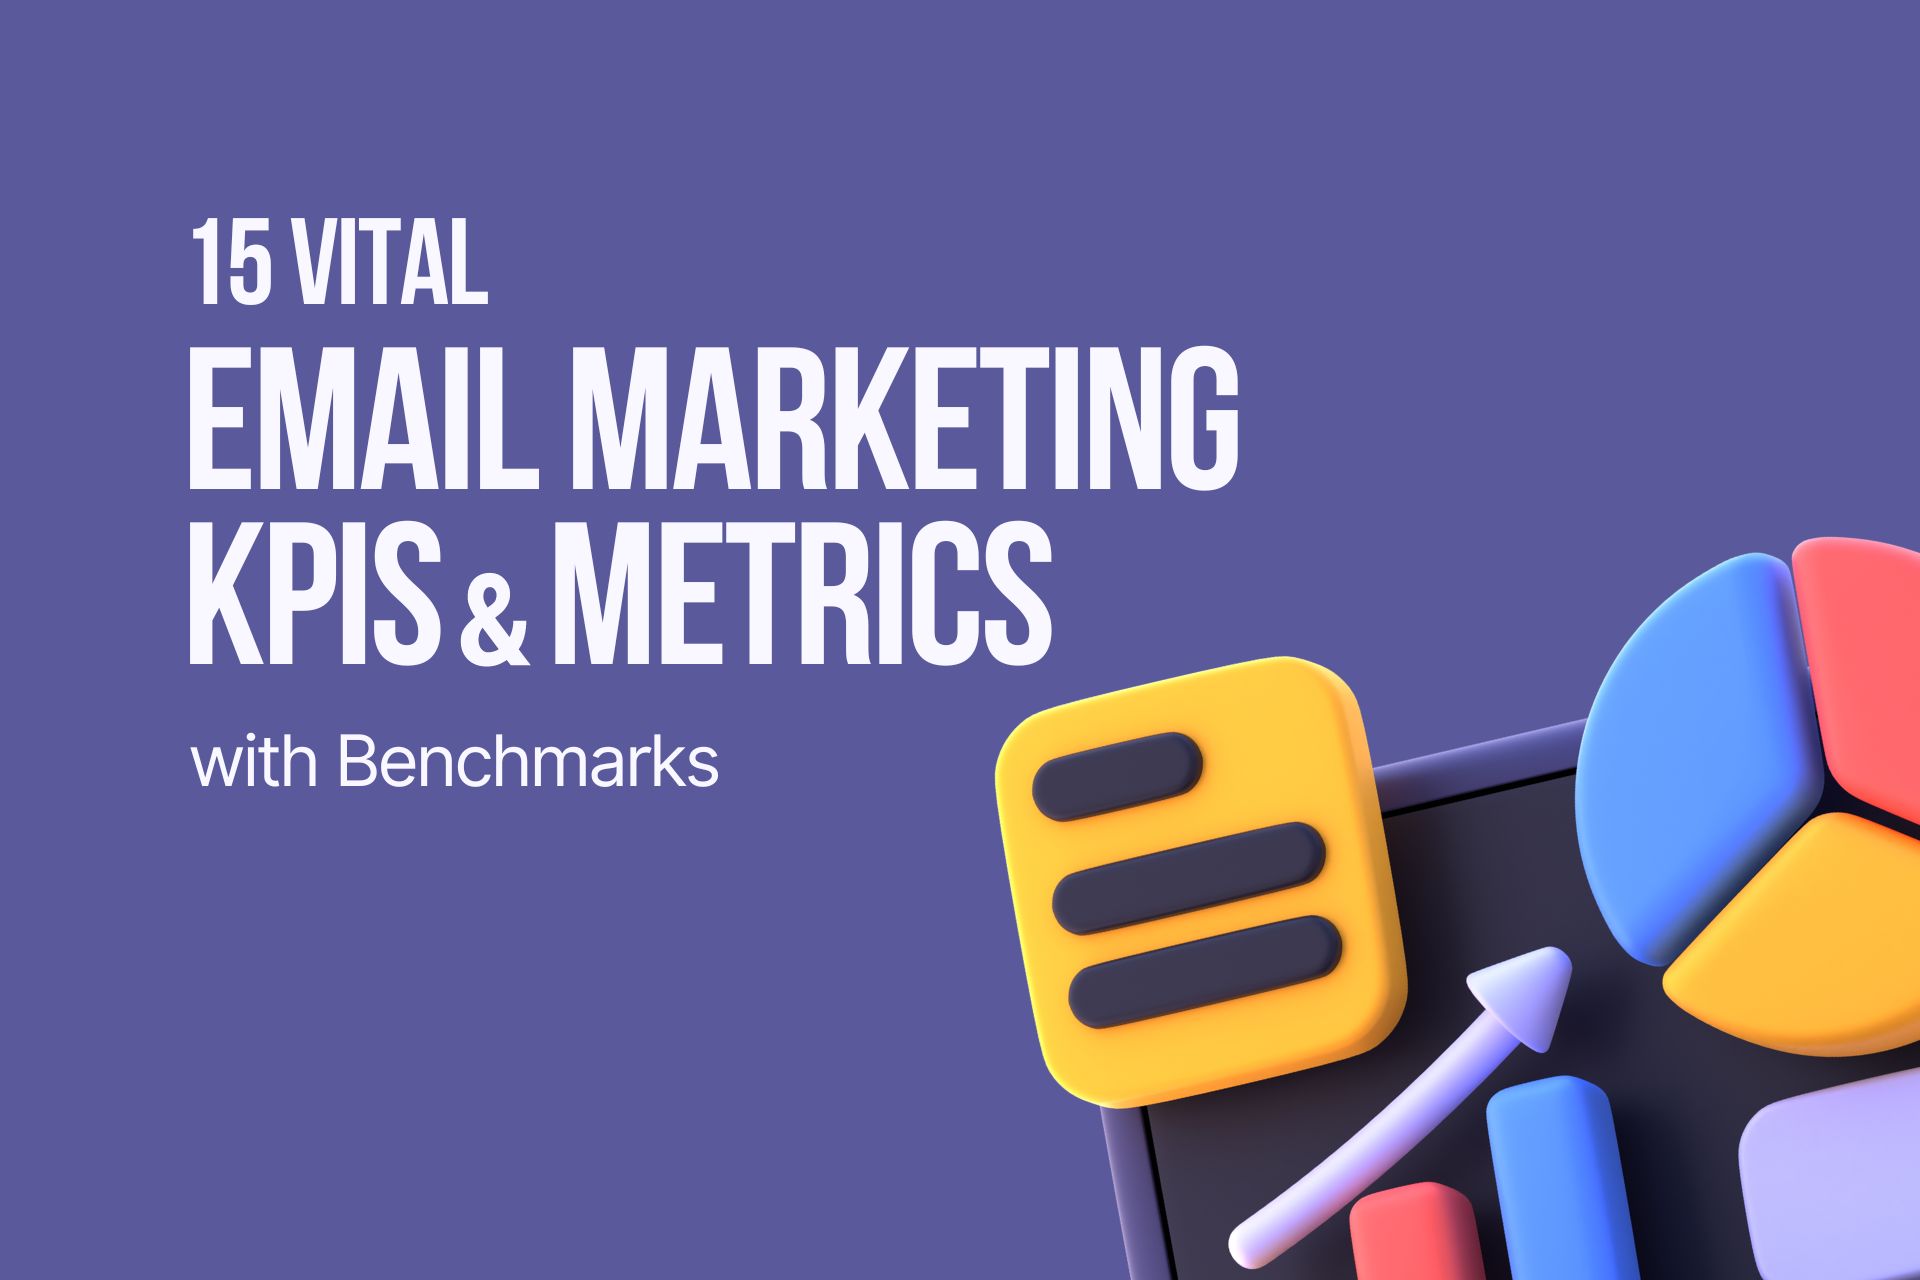 15 Vital Email Marketing KPIs & Metrics with Benchmarks